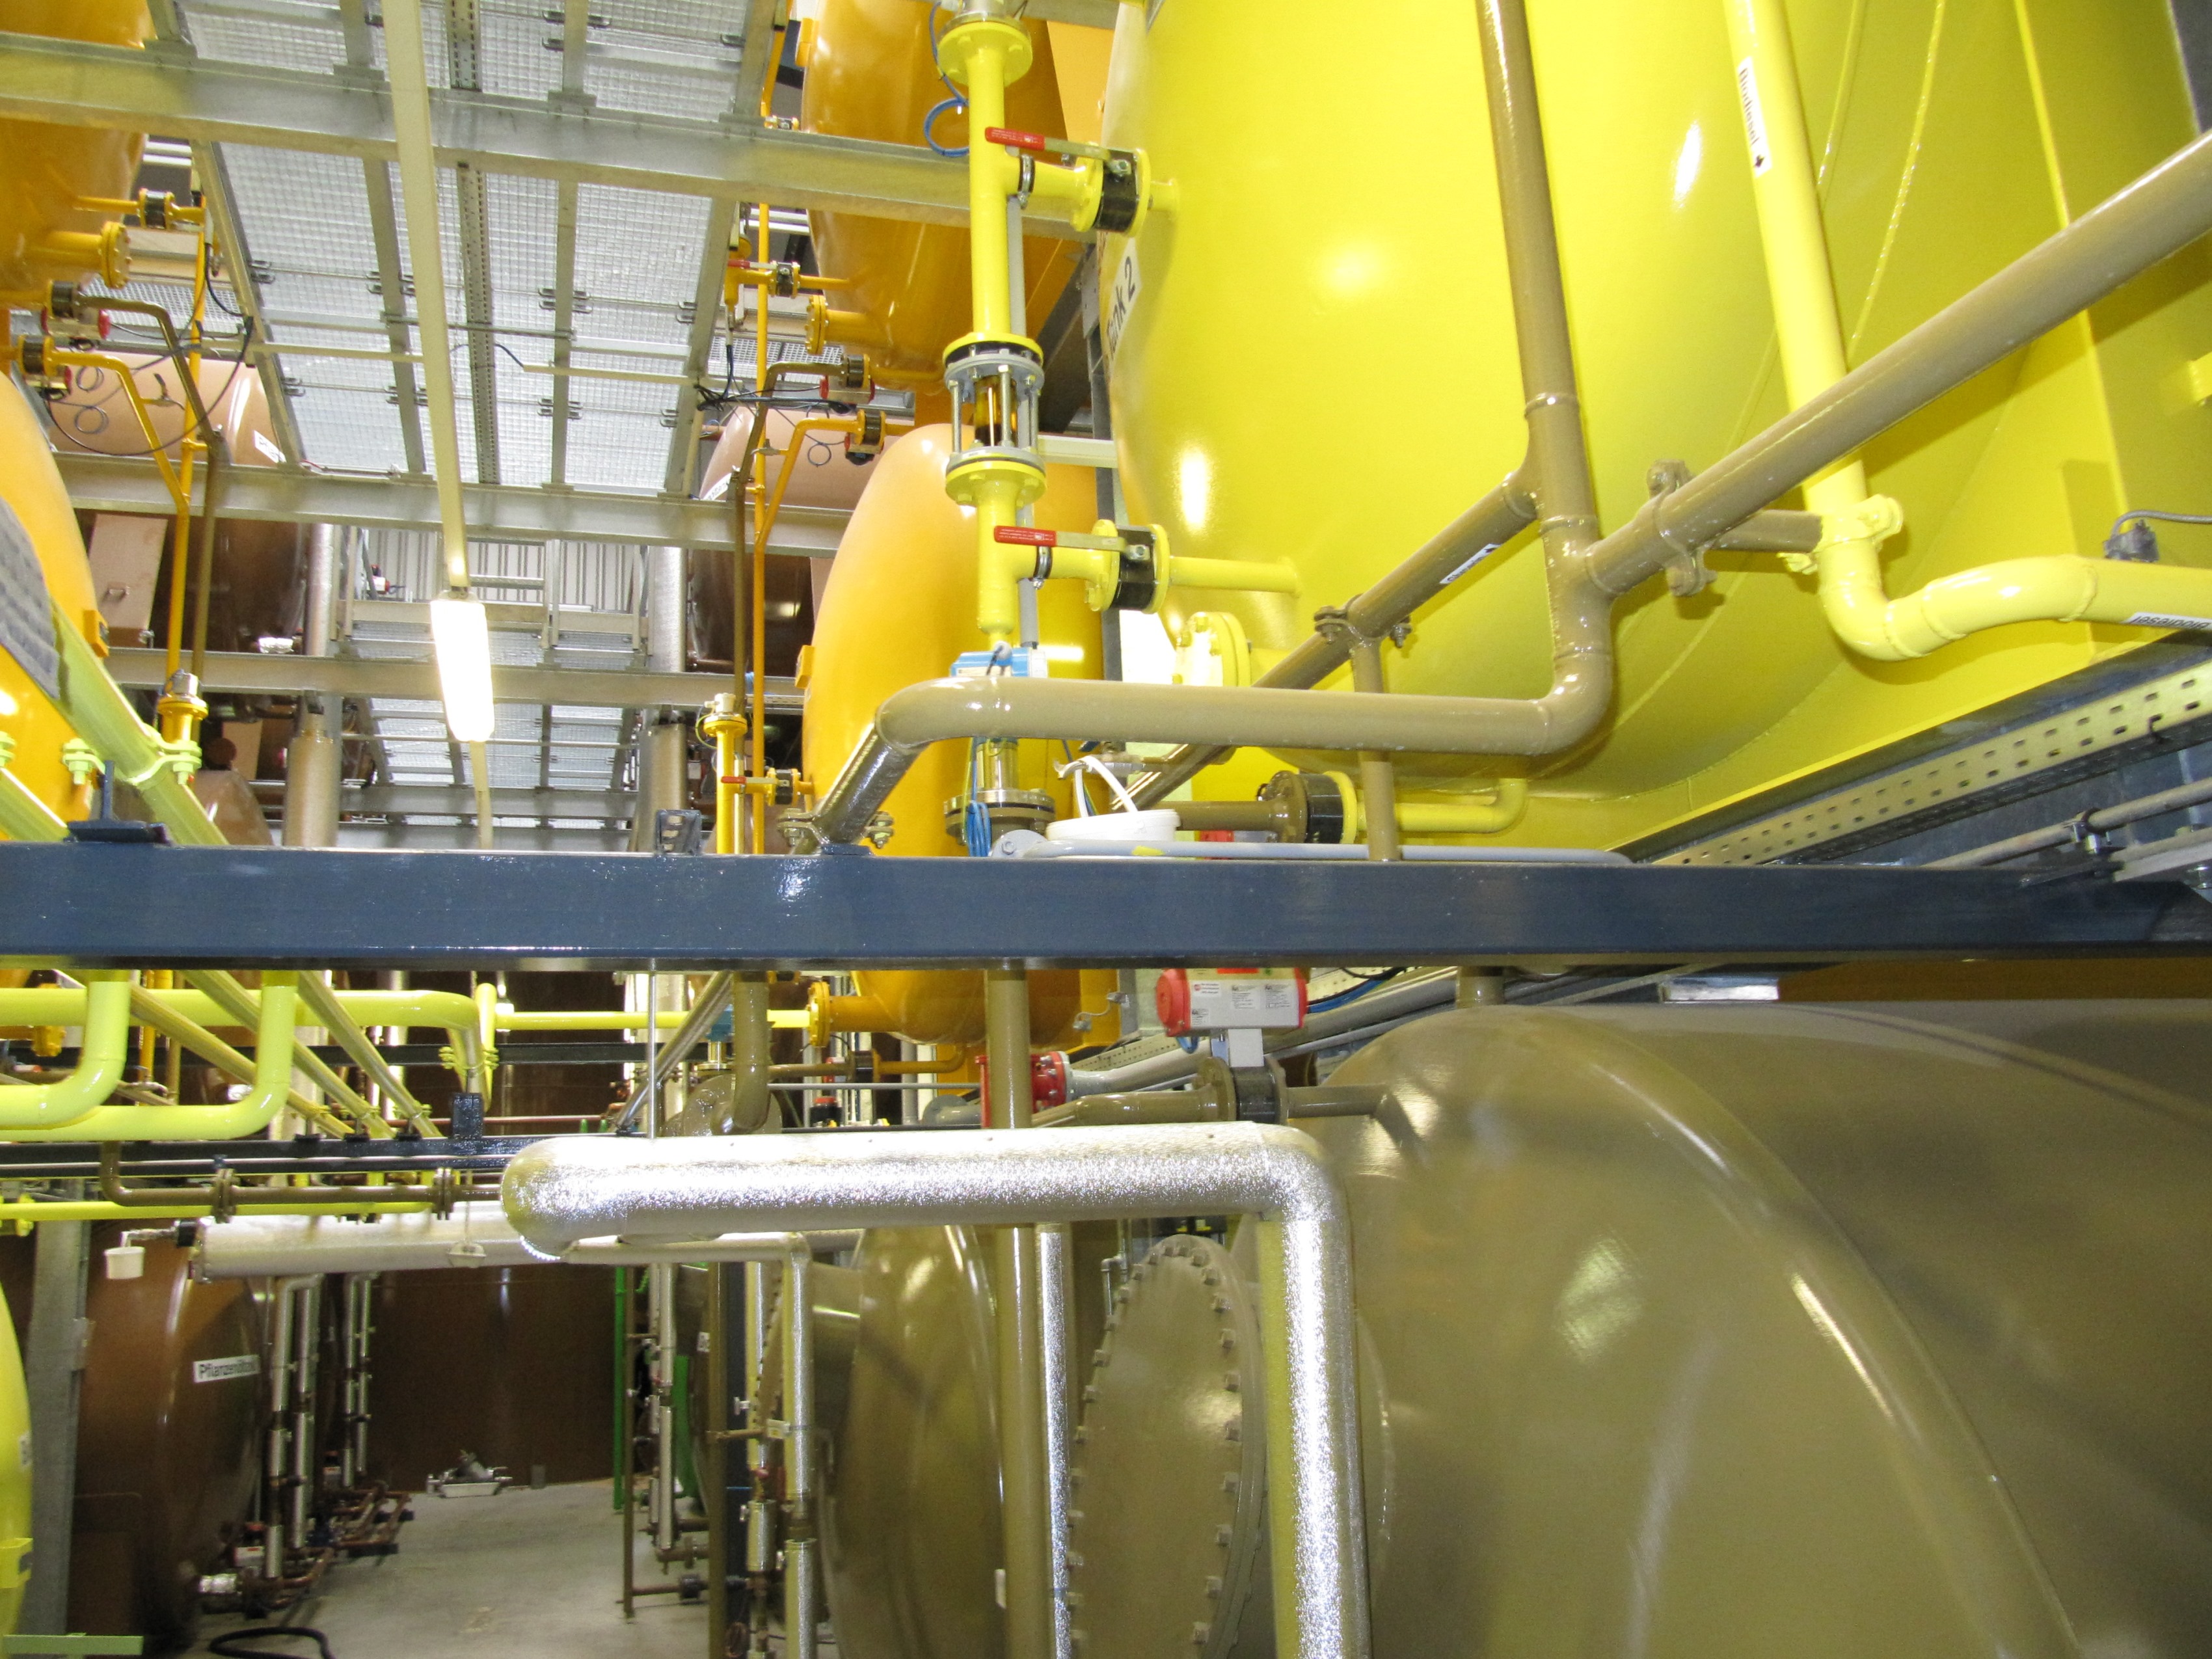 BIO-Diesel Krems – Modification Of The Biodiesel Plant